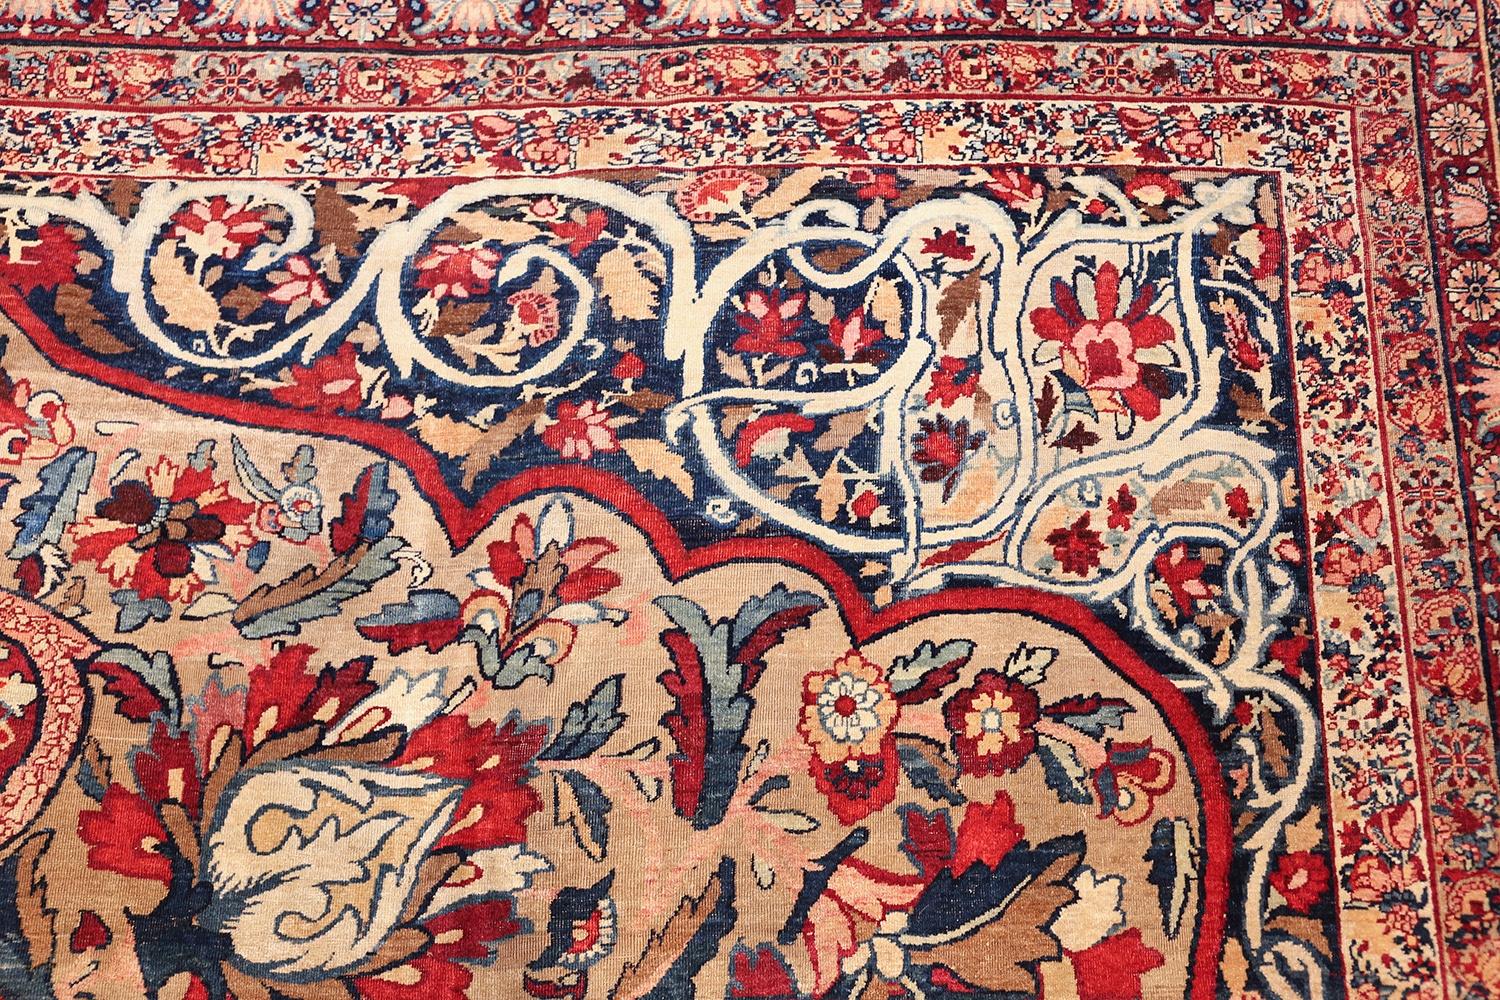 Hand-Knotted Nazmiyal Silk & Wool Antique Persian Kerman Lavar Rug. Size: 10' 6